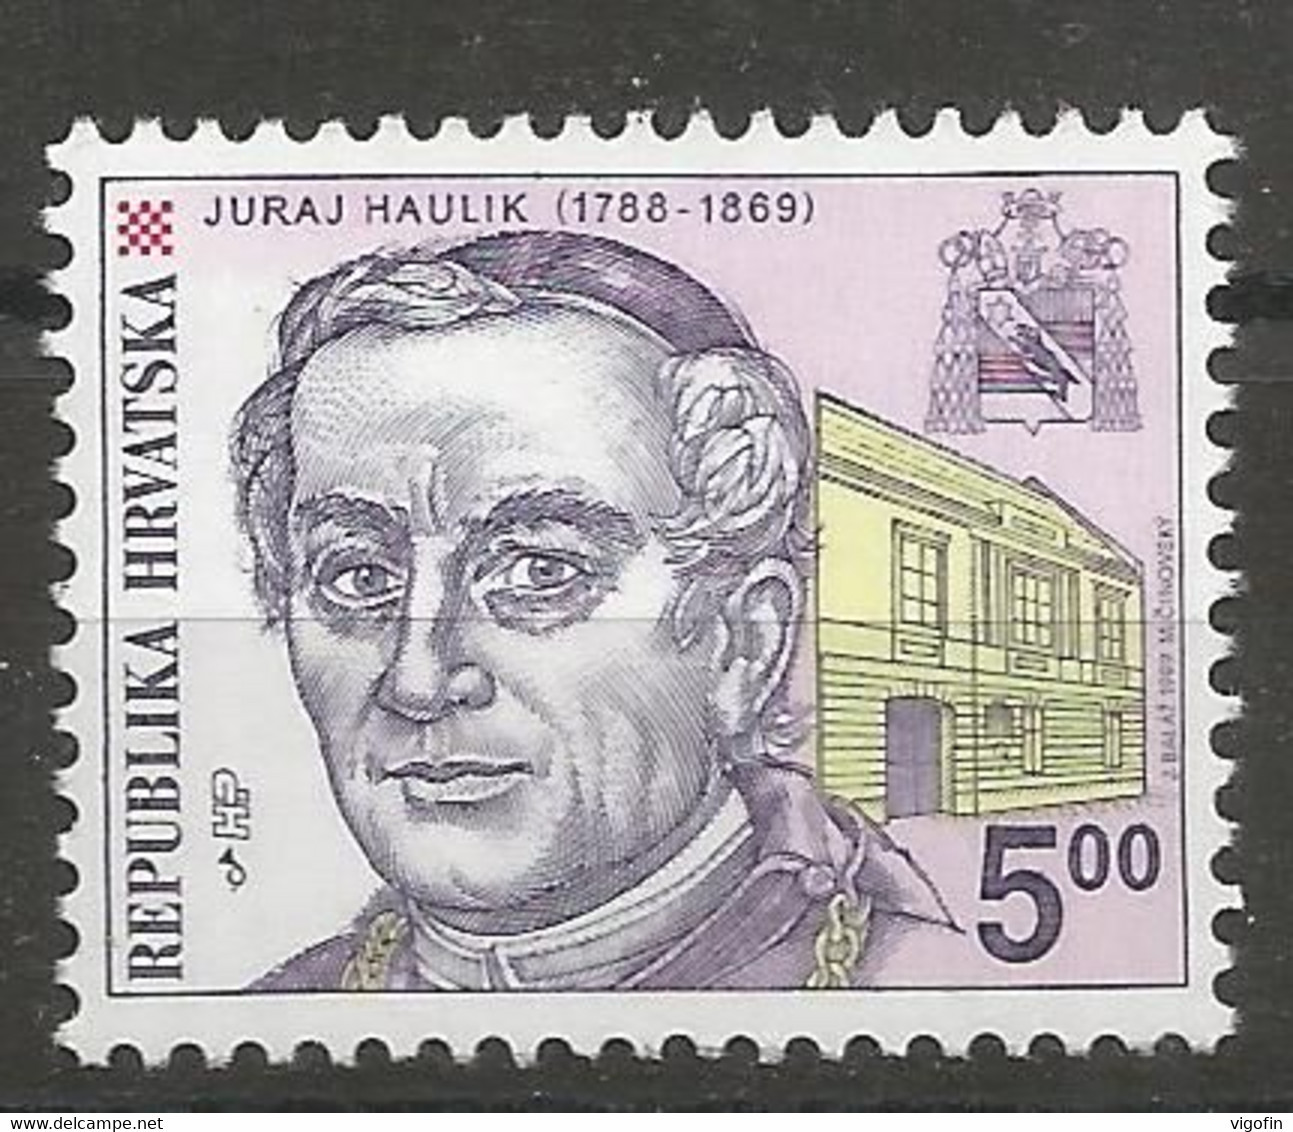 HR 1999-497 KARDINAL JURAJ HAULIK, CROATIA HRVATSKA, 1 X 1v, MNH - Croatie